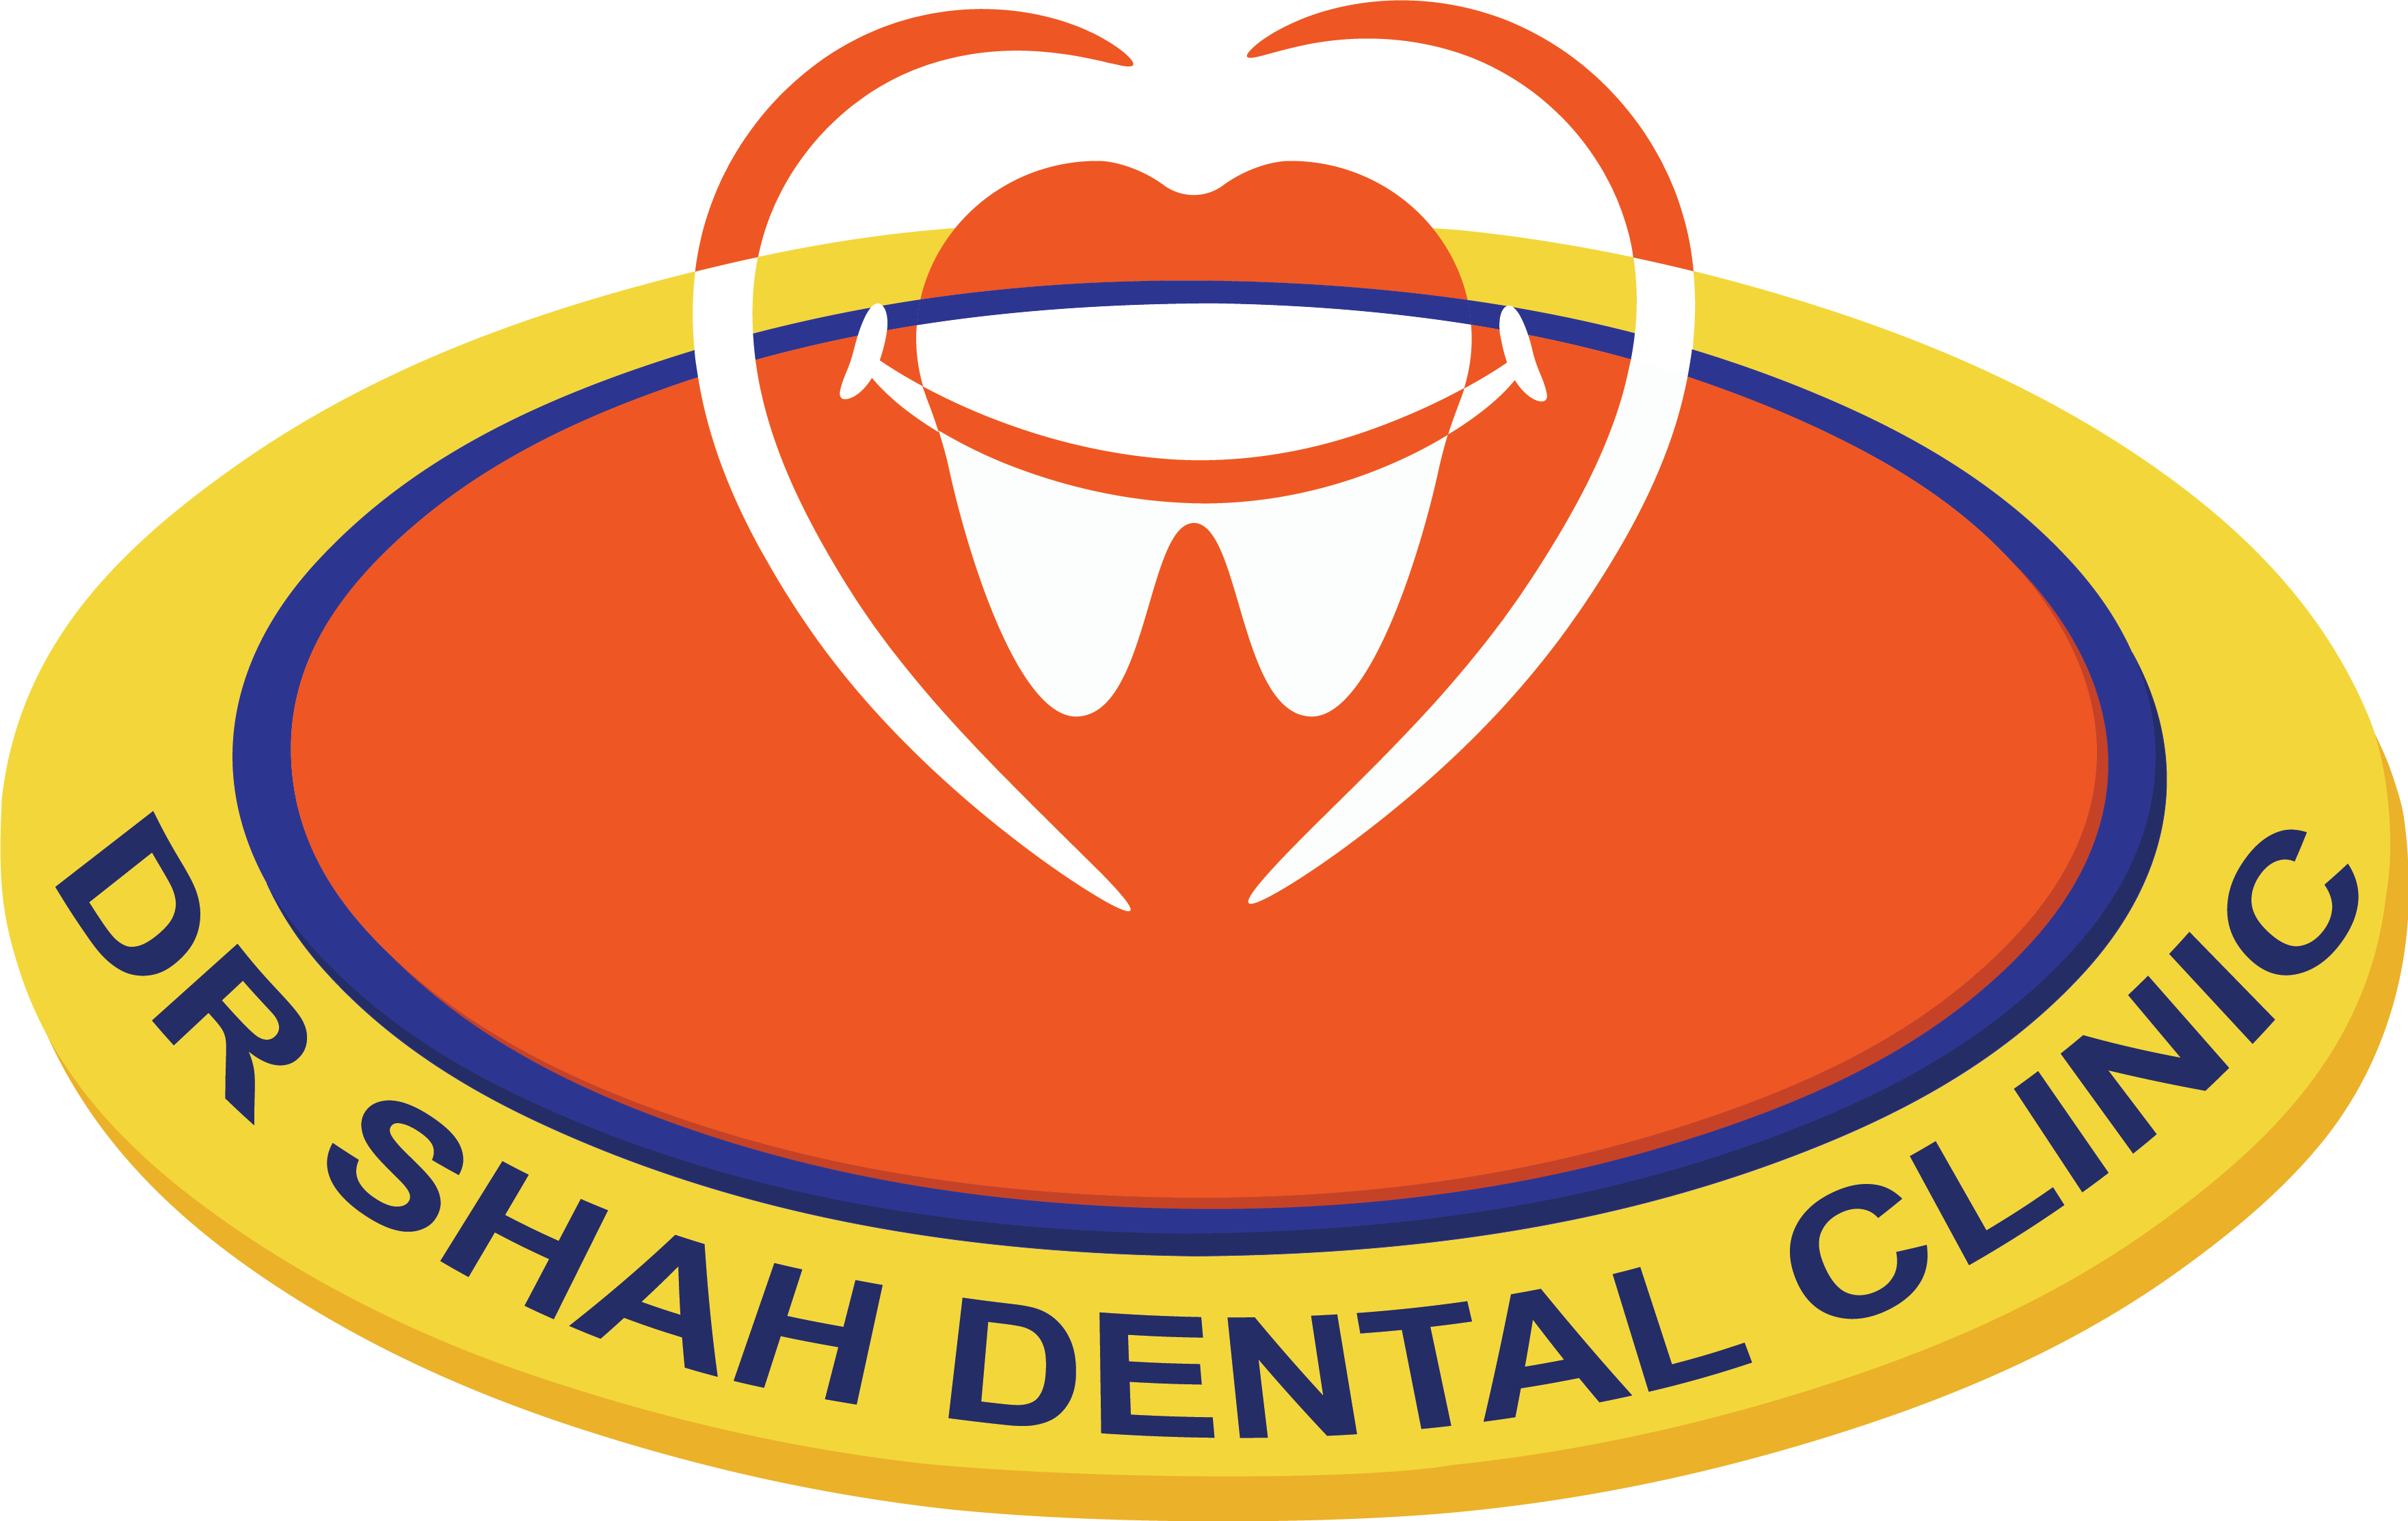 Dr Shah Dental Clinic